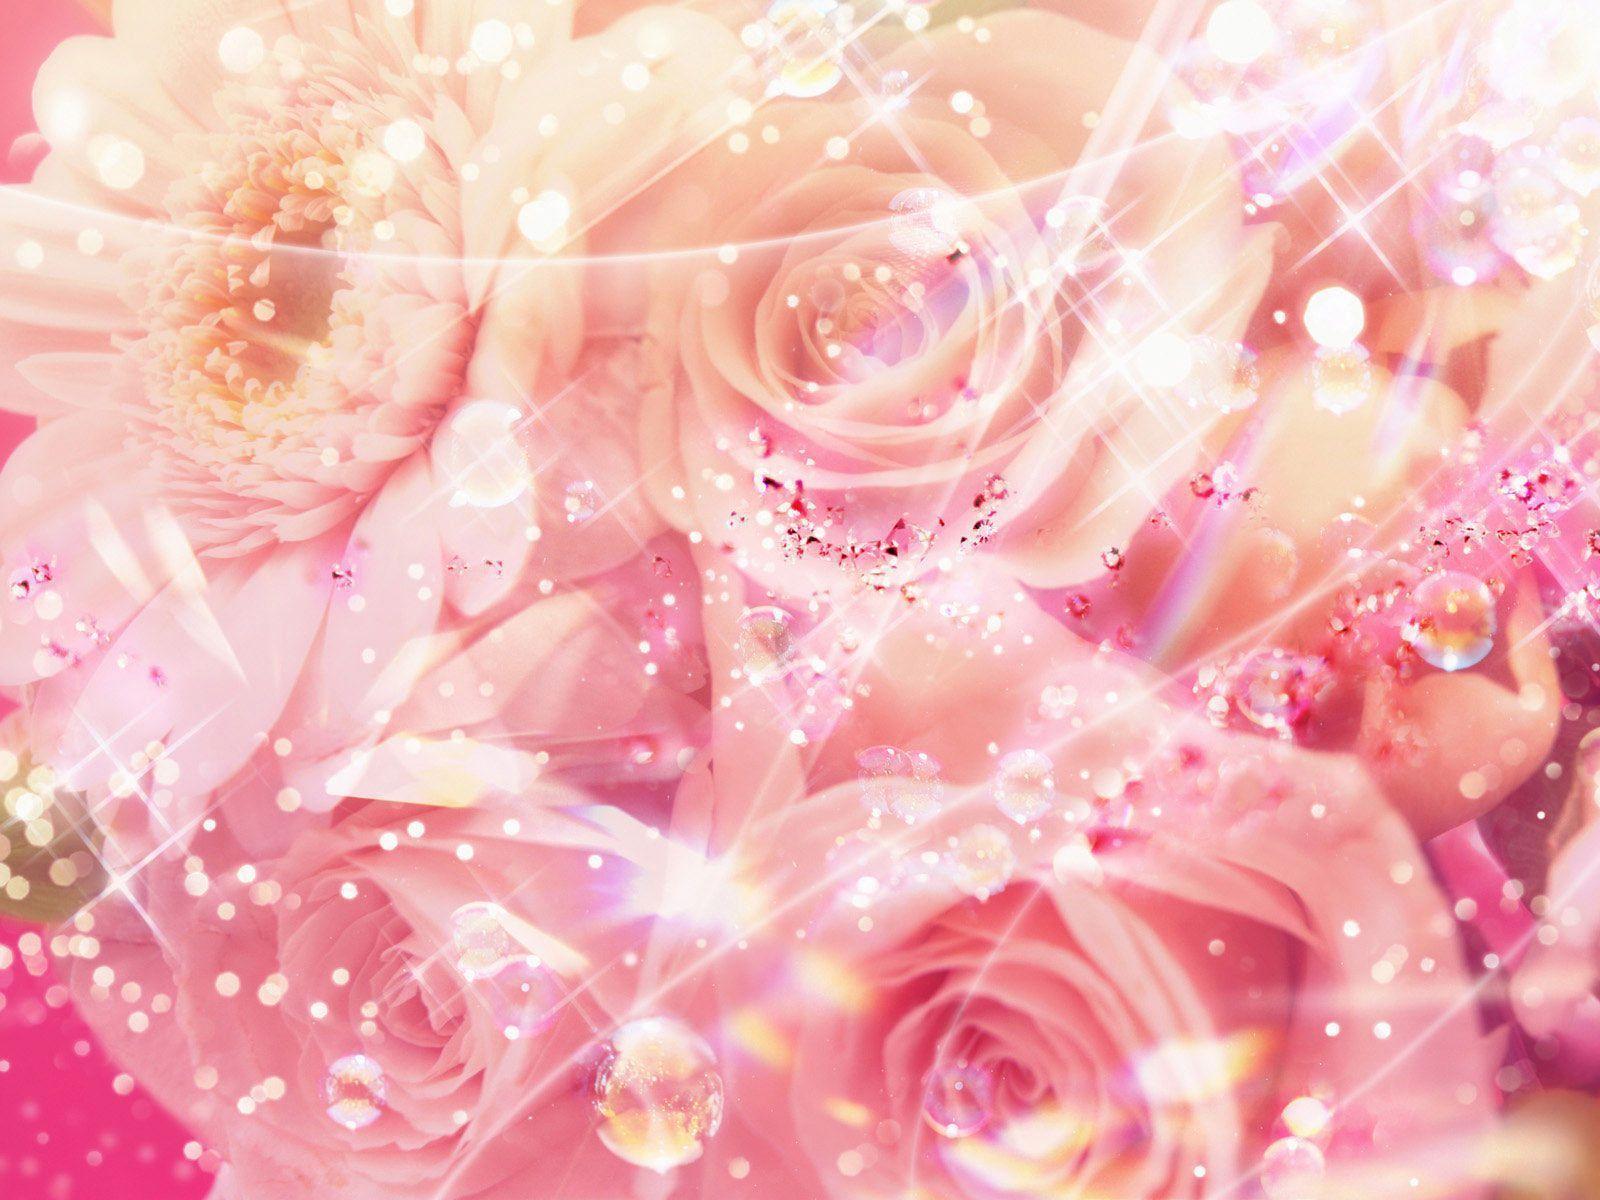 Desktop Wallpaper · Gallery · Windows 7 · Pink roses. Free